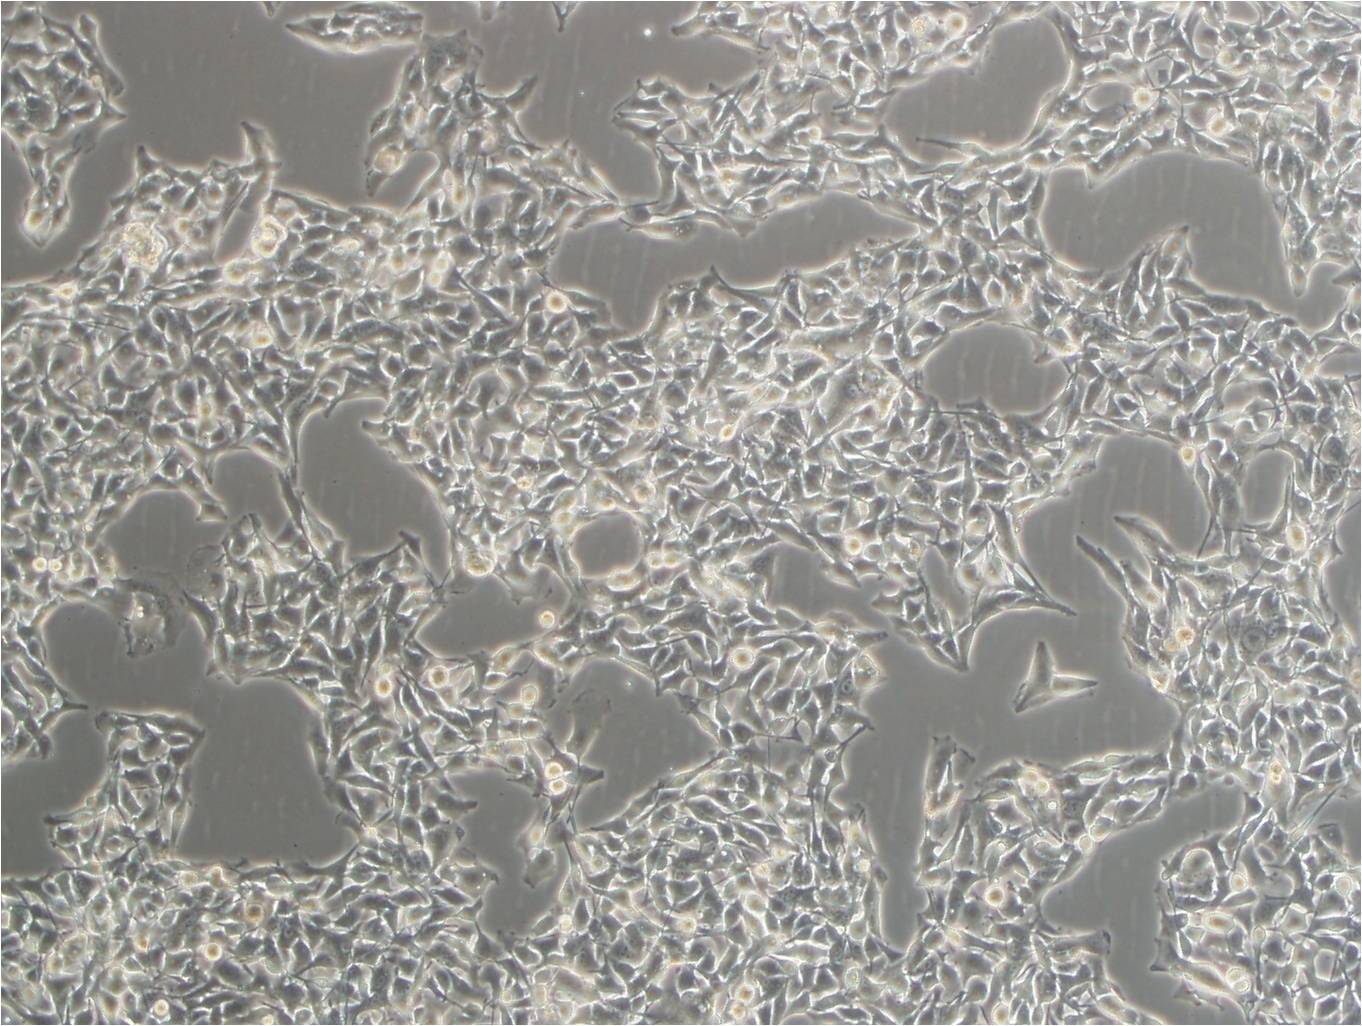 IOSE-29 Cell|人卵巢上皮细胞